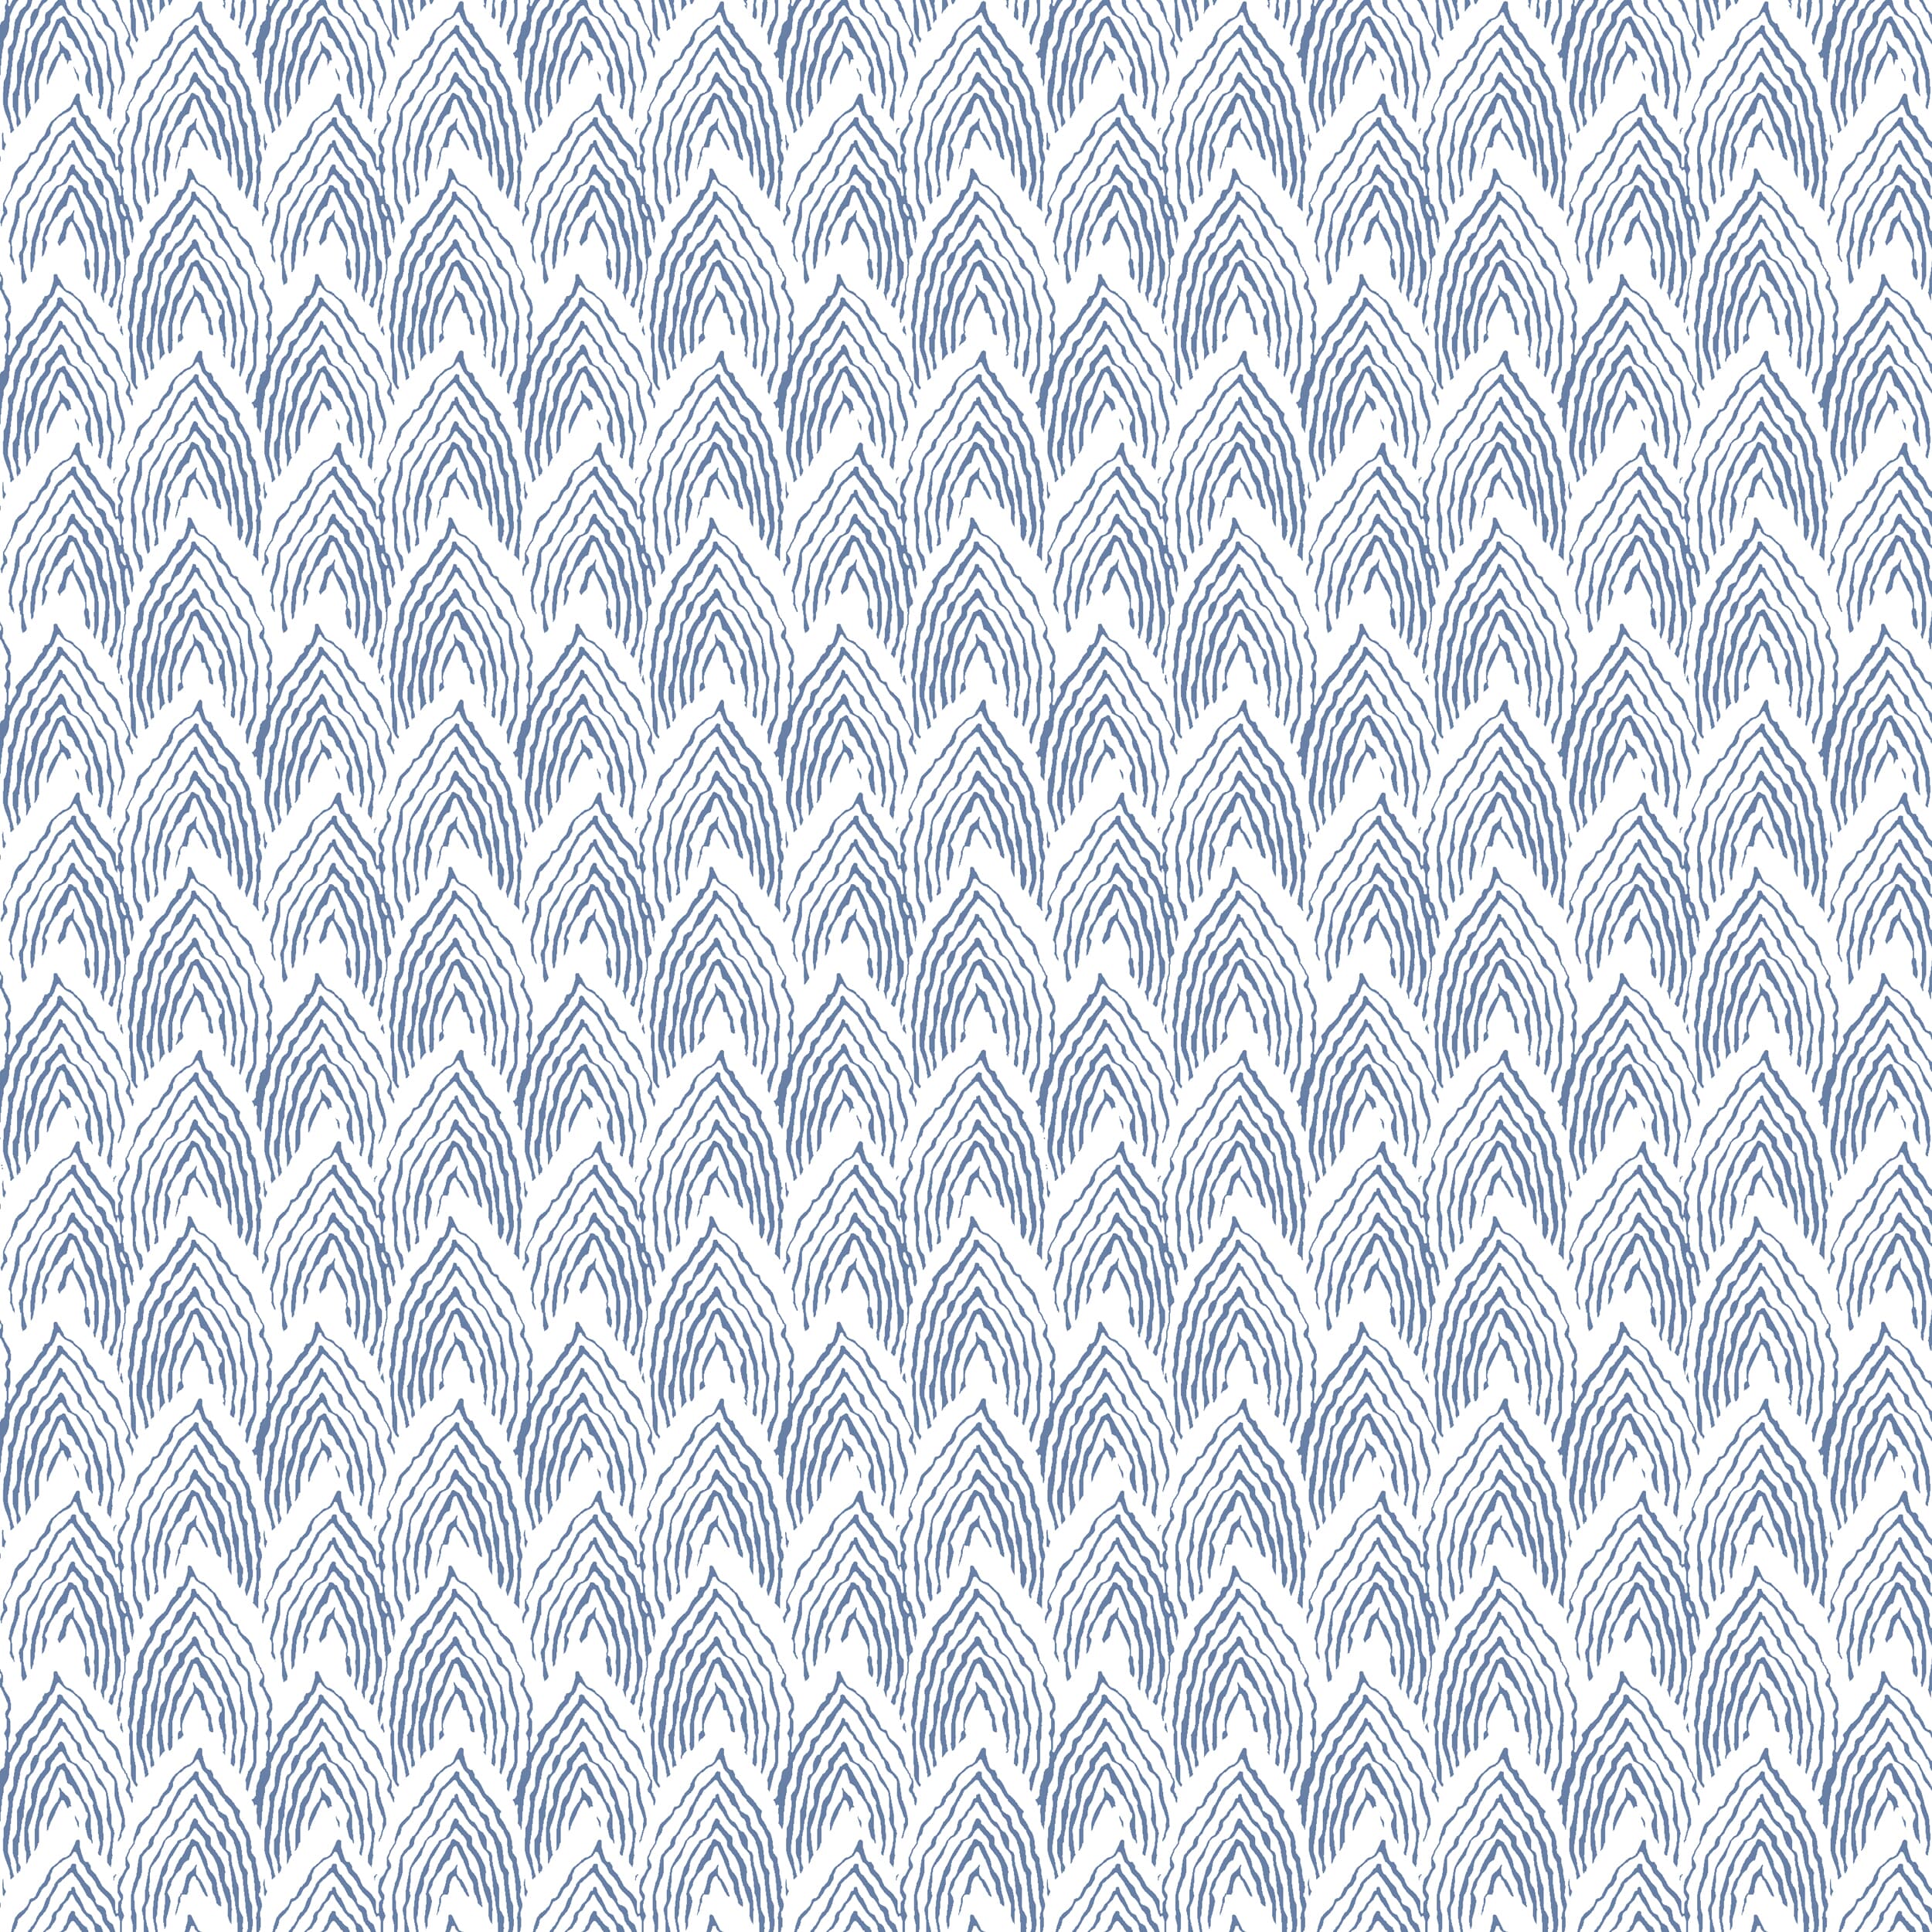 W01vl-5 Piedmont Ocean Wallpaper by Stout Fabric